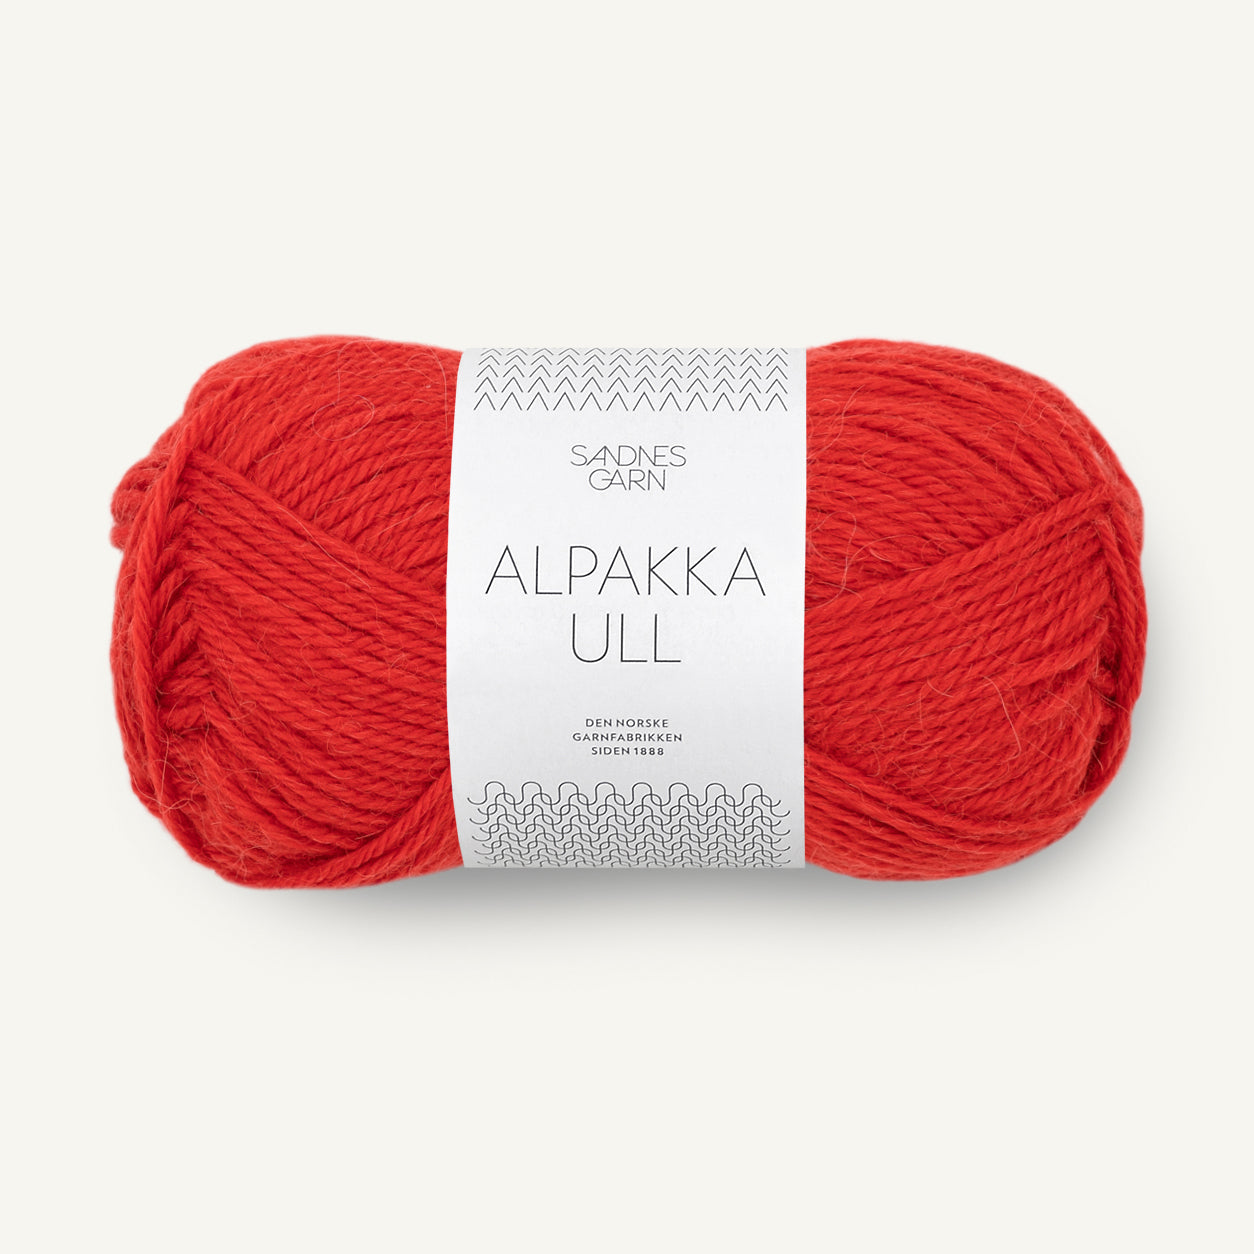 Alpakka Ull scarlet red [4018]